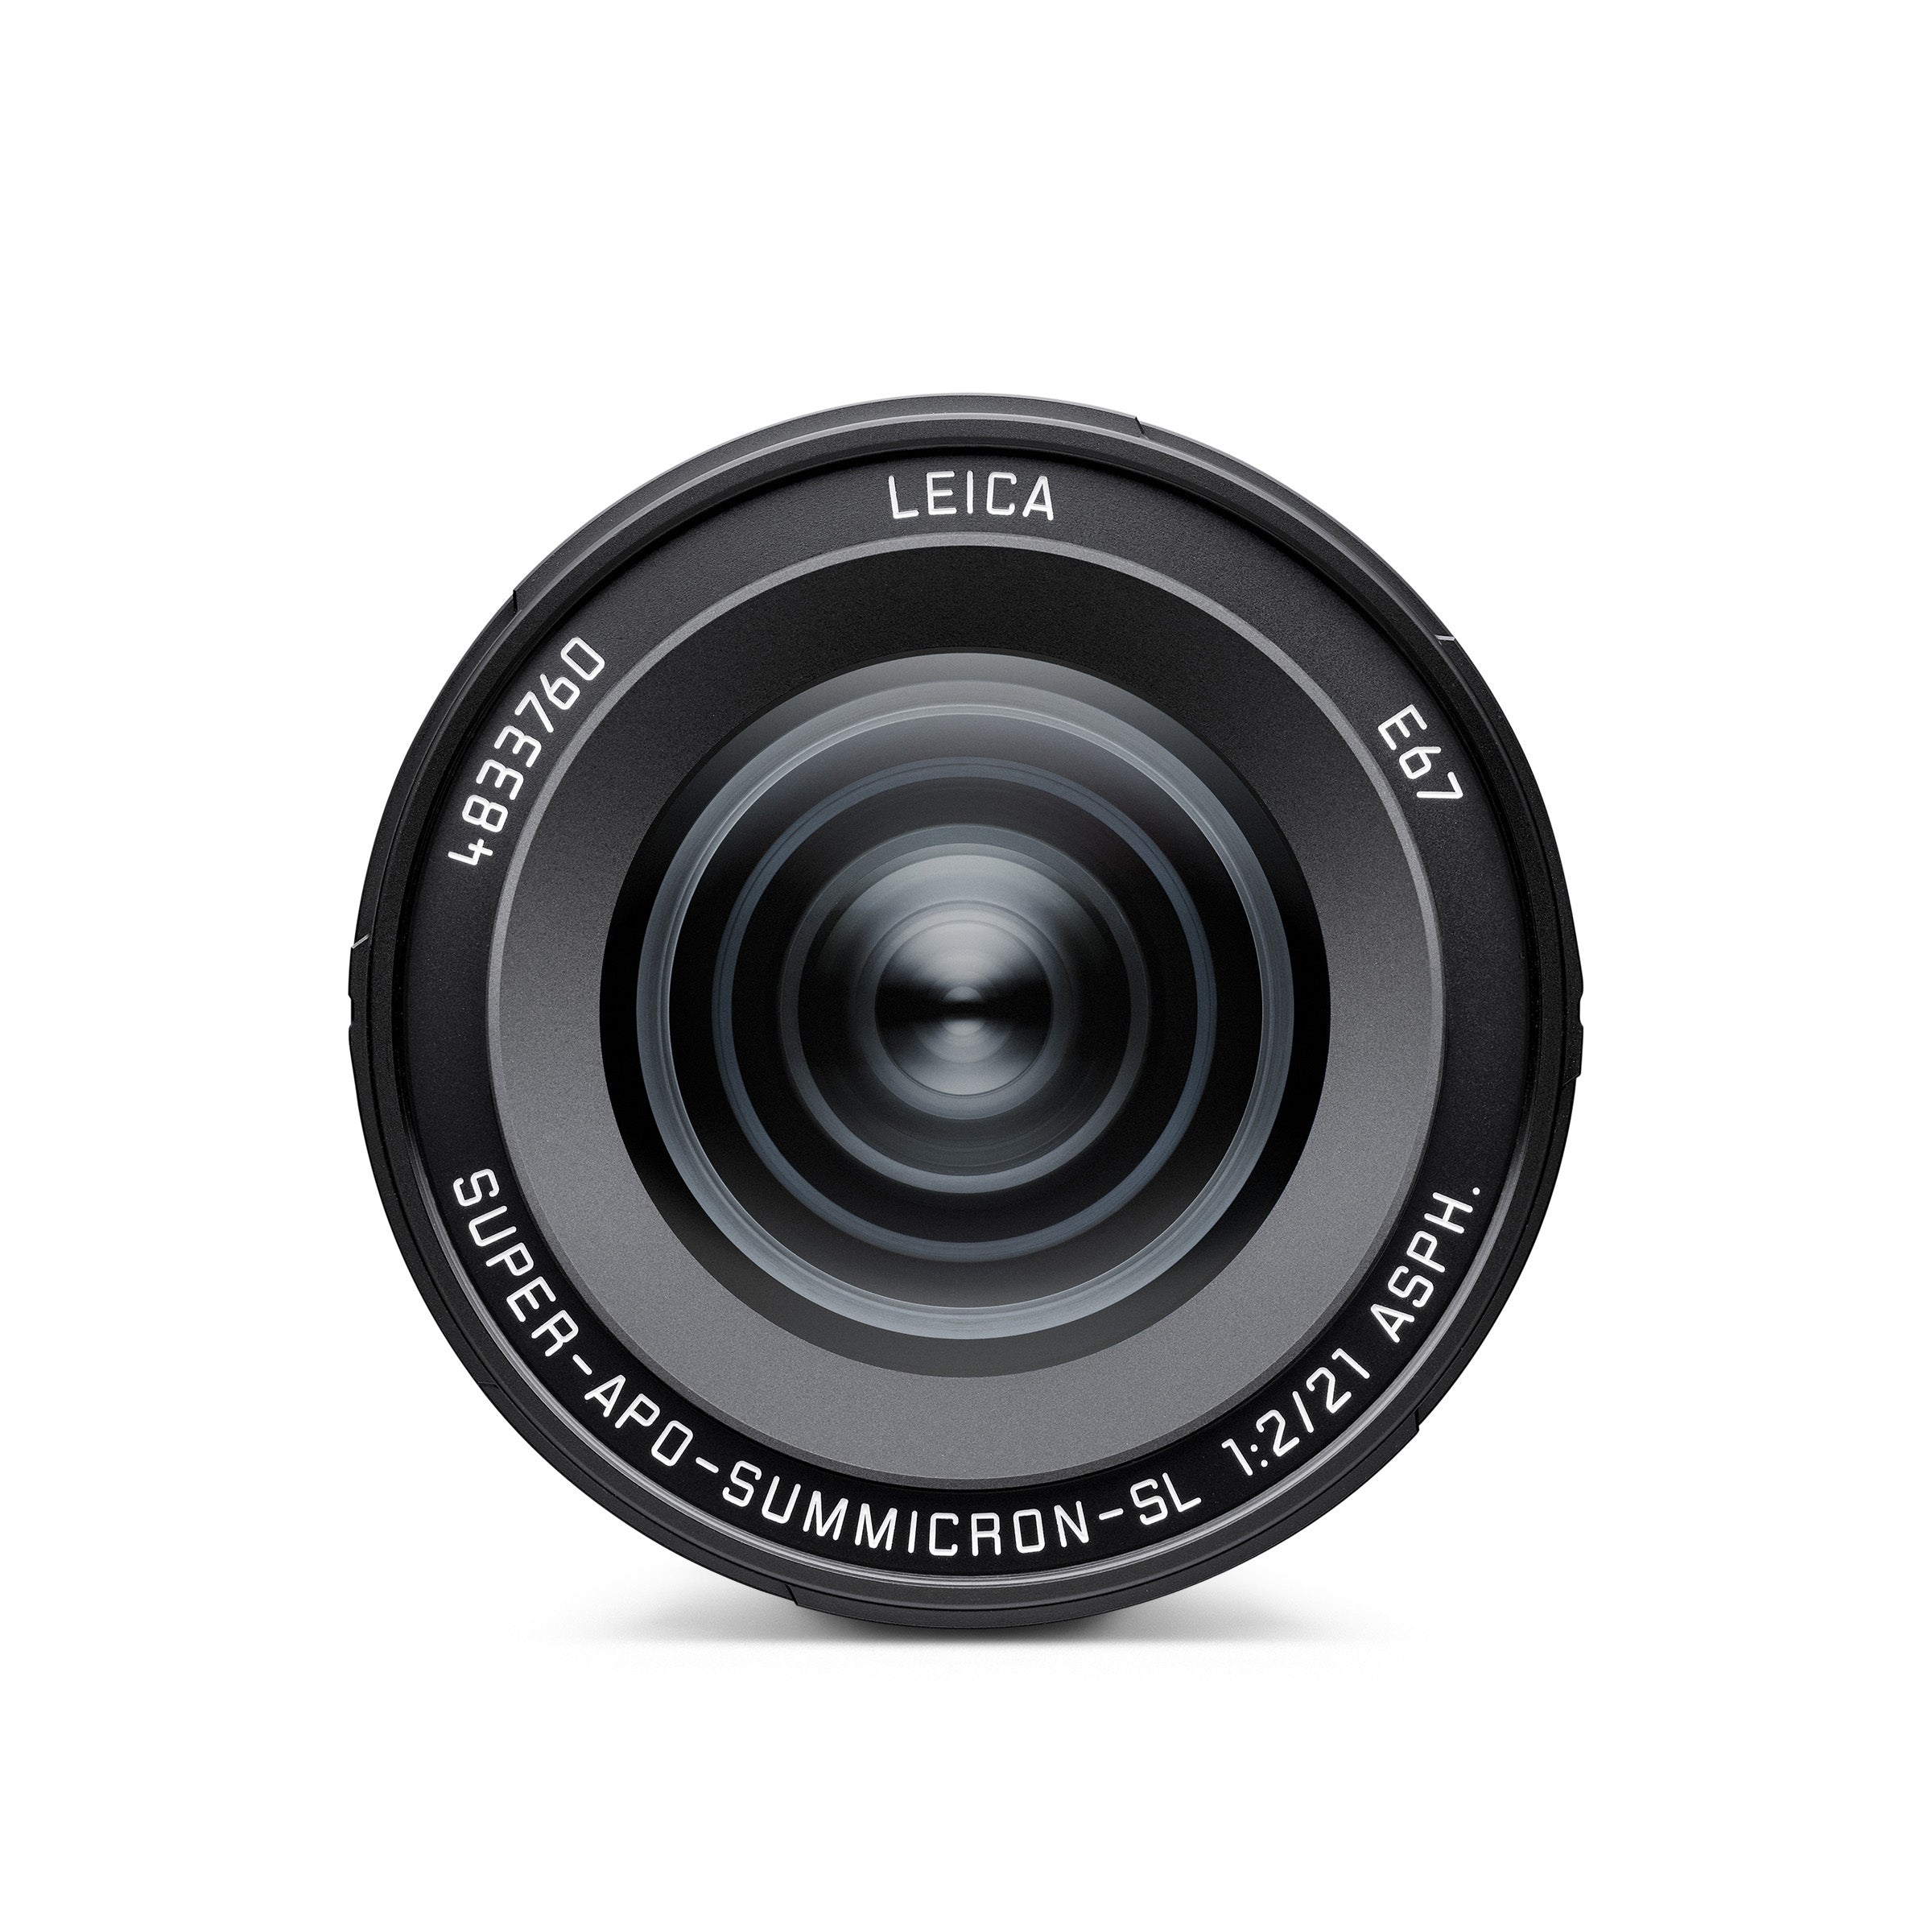 Leica Super-APO-Summicron-SL 21mm F2